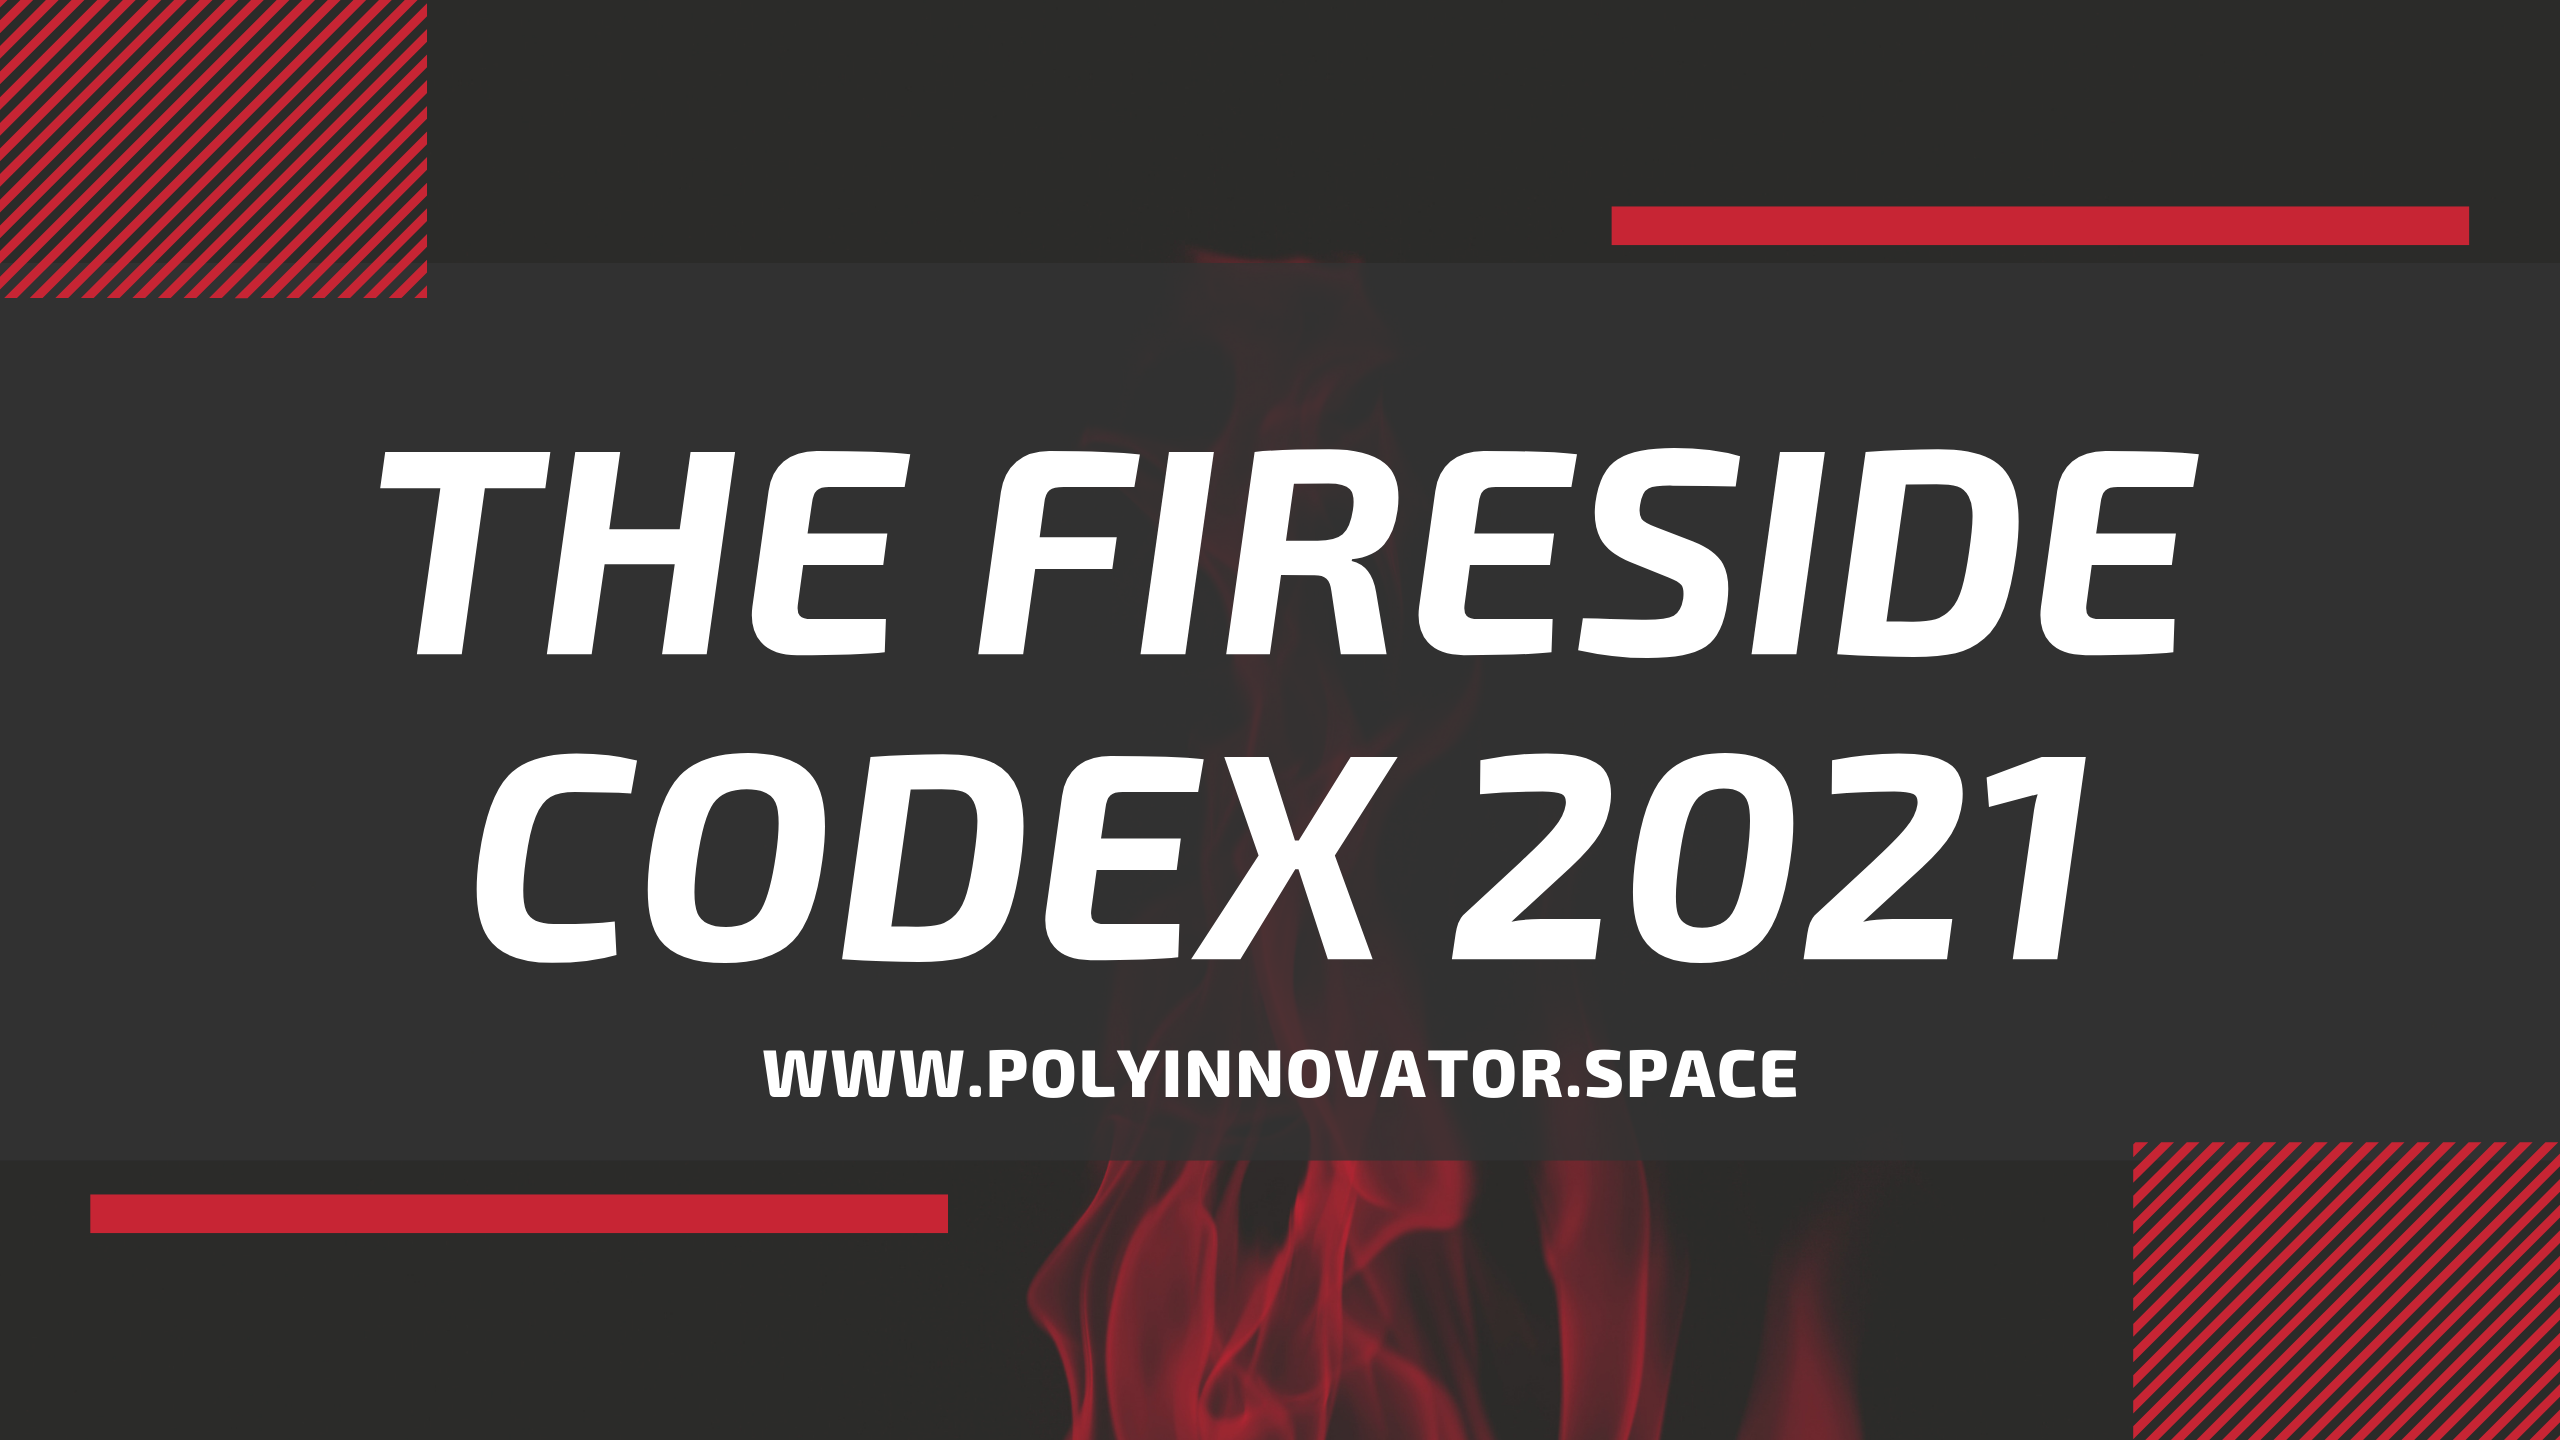 The Fireside Codex 2021